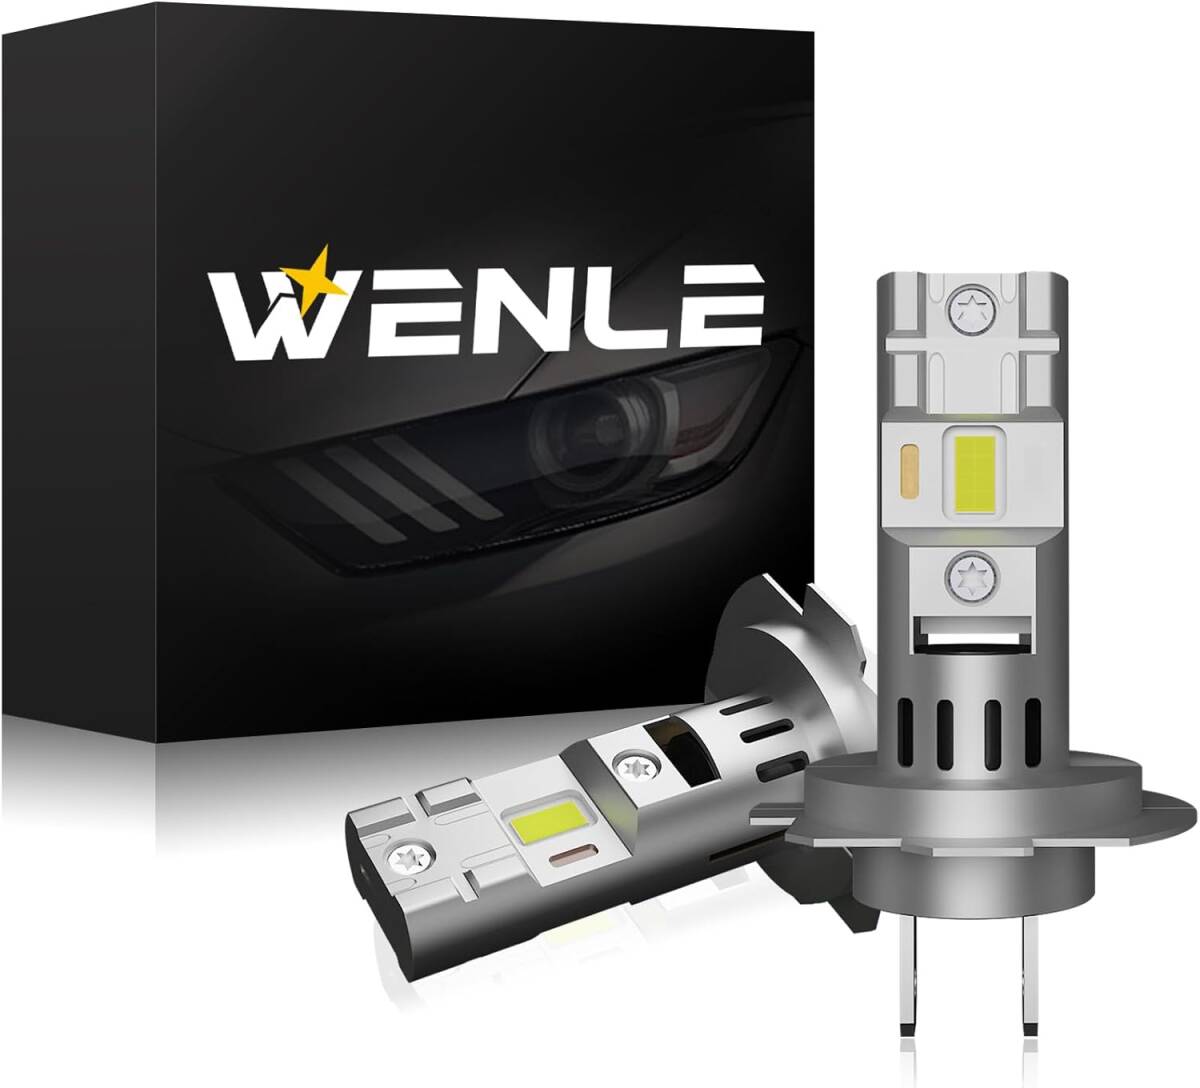 H7 WENLE(ウエンレ) 新規 純正ハロゲンサイズ+爆光18000LM H7 led ヘッドライト 車/バイク用 車検対応 一_画像1